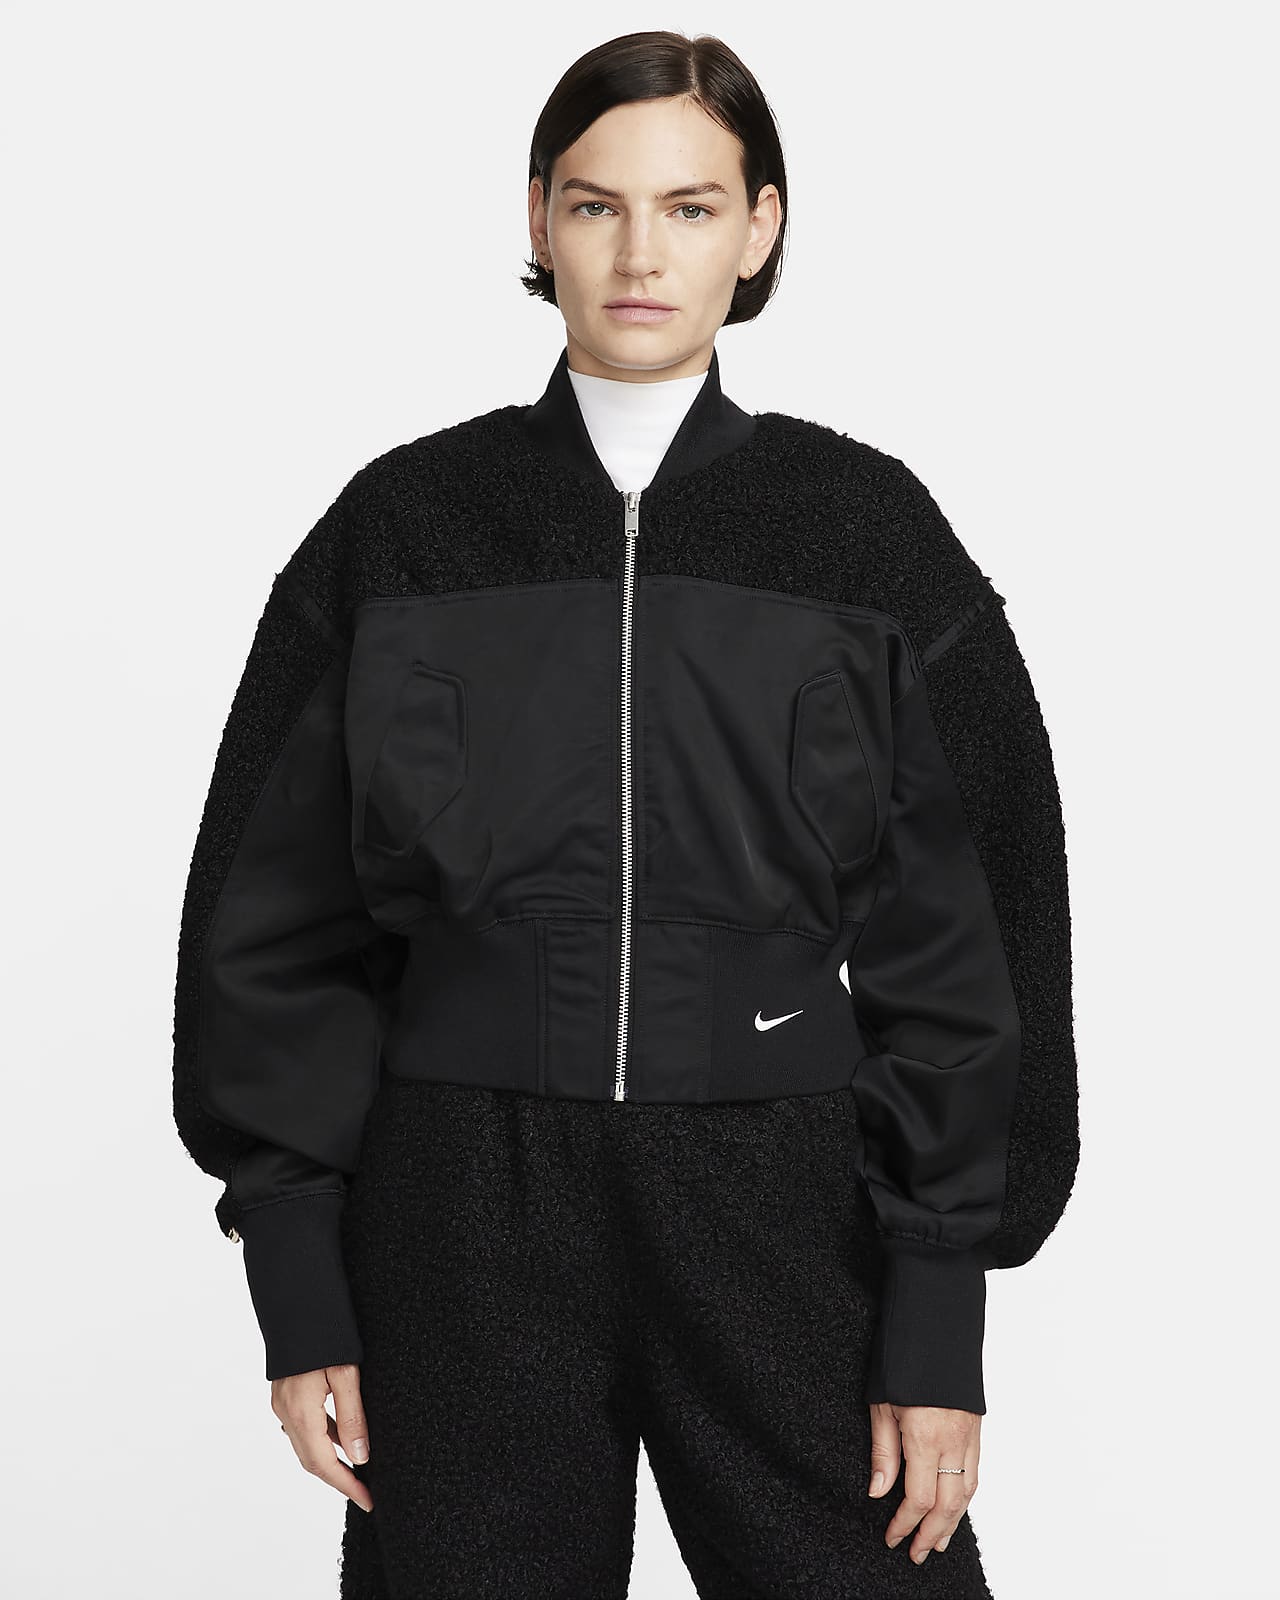 Nike Sportswear Collection vastag polár női pilótakabát